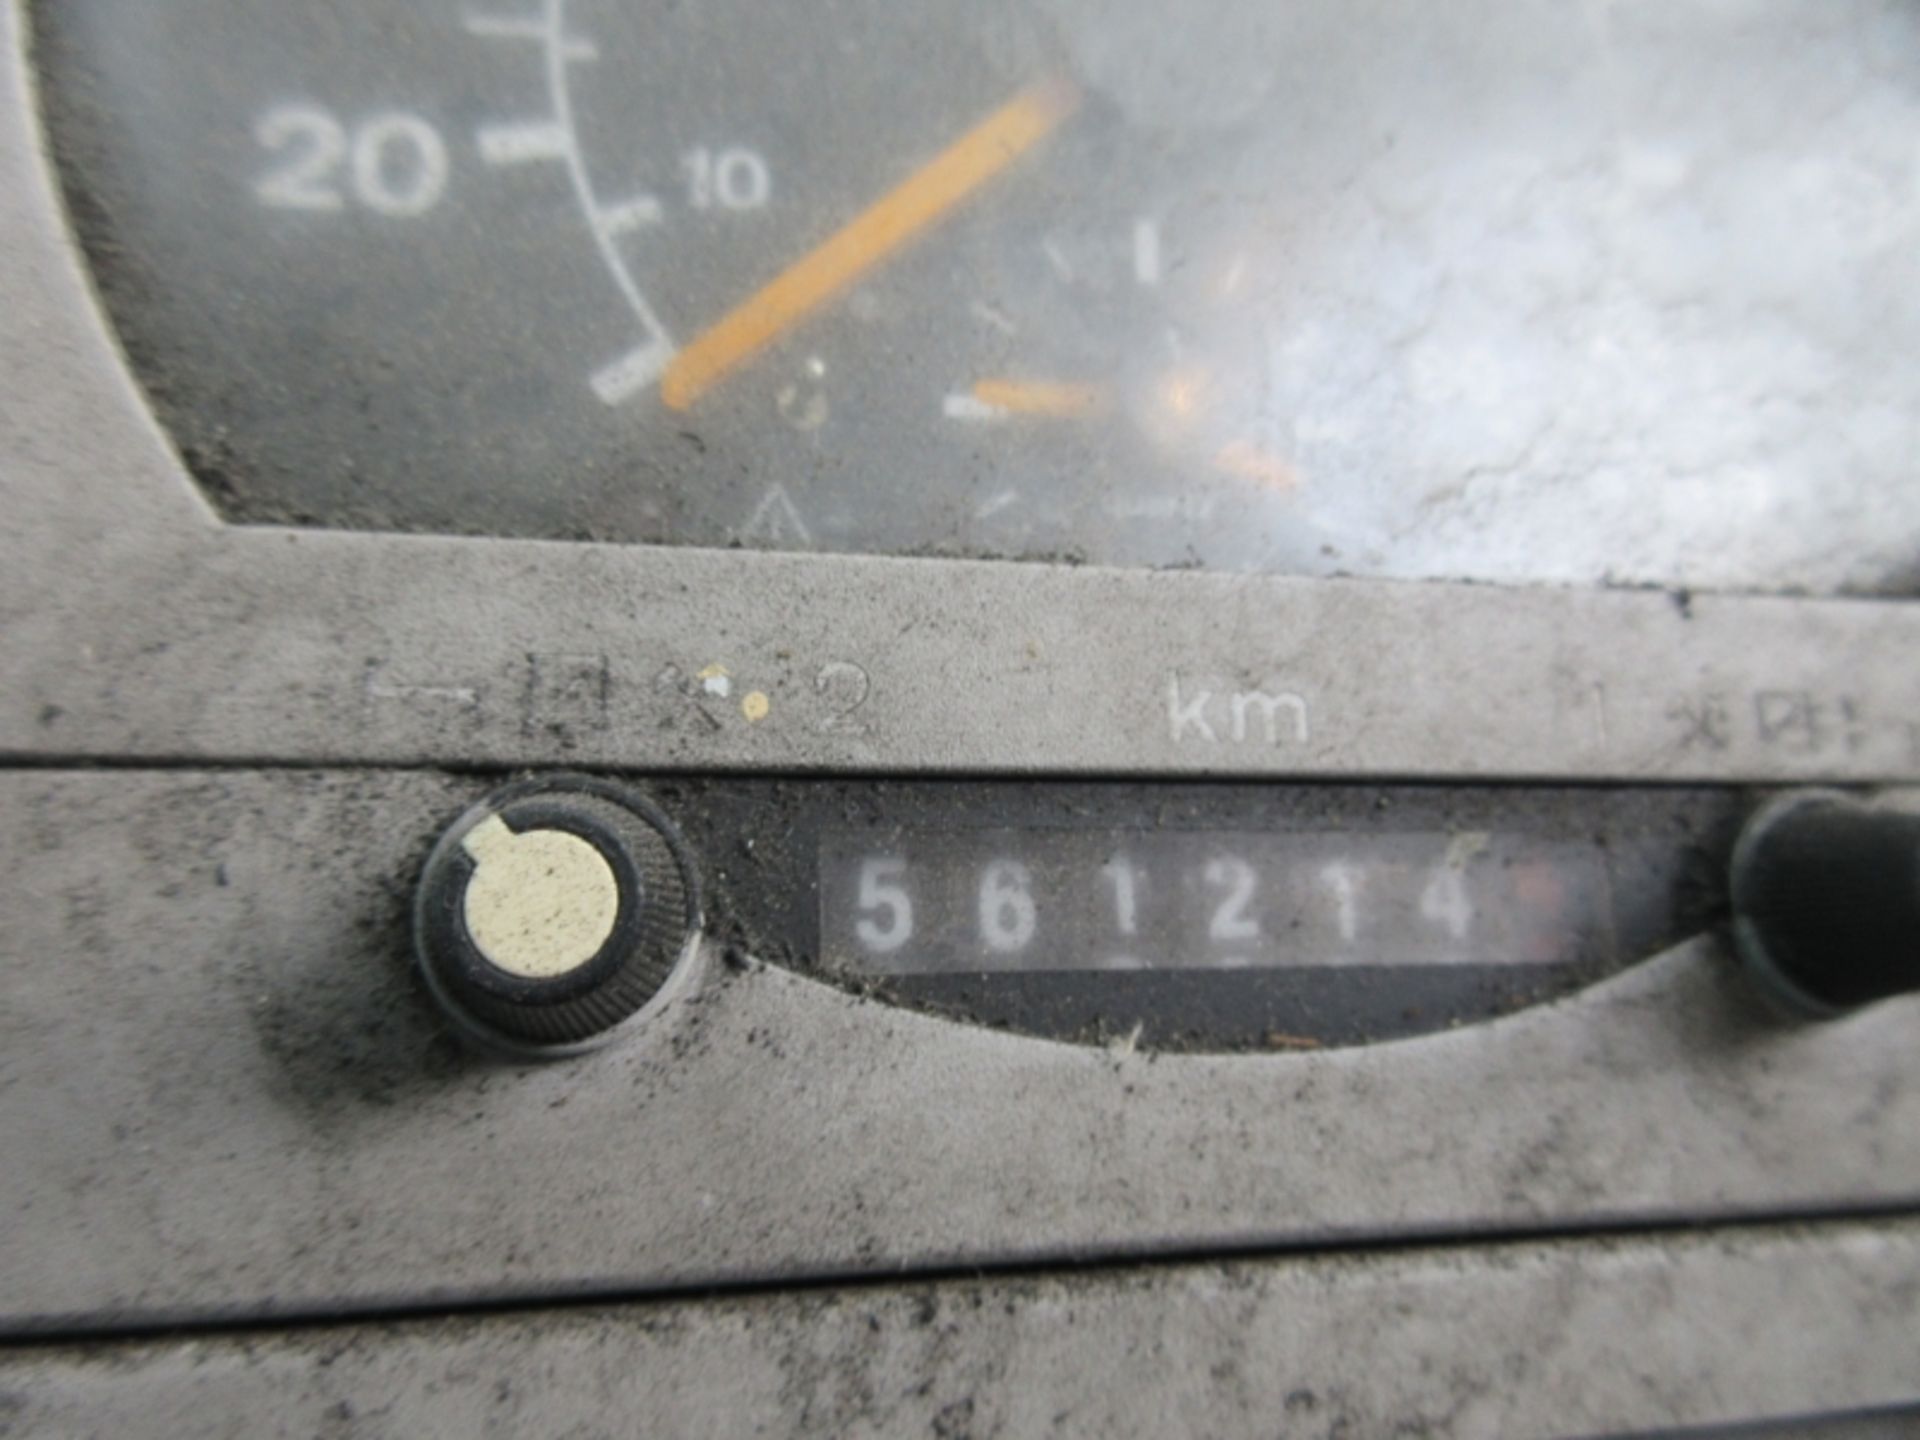 MAN M2000 15.220 - 8870cc Sleeper Cab Diesel - VIN: WMAL88ZZZ2Y100478 - Year: 2002 - 561,000 km - - Image 8 of 8